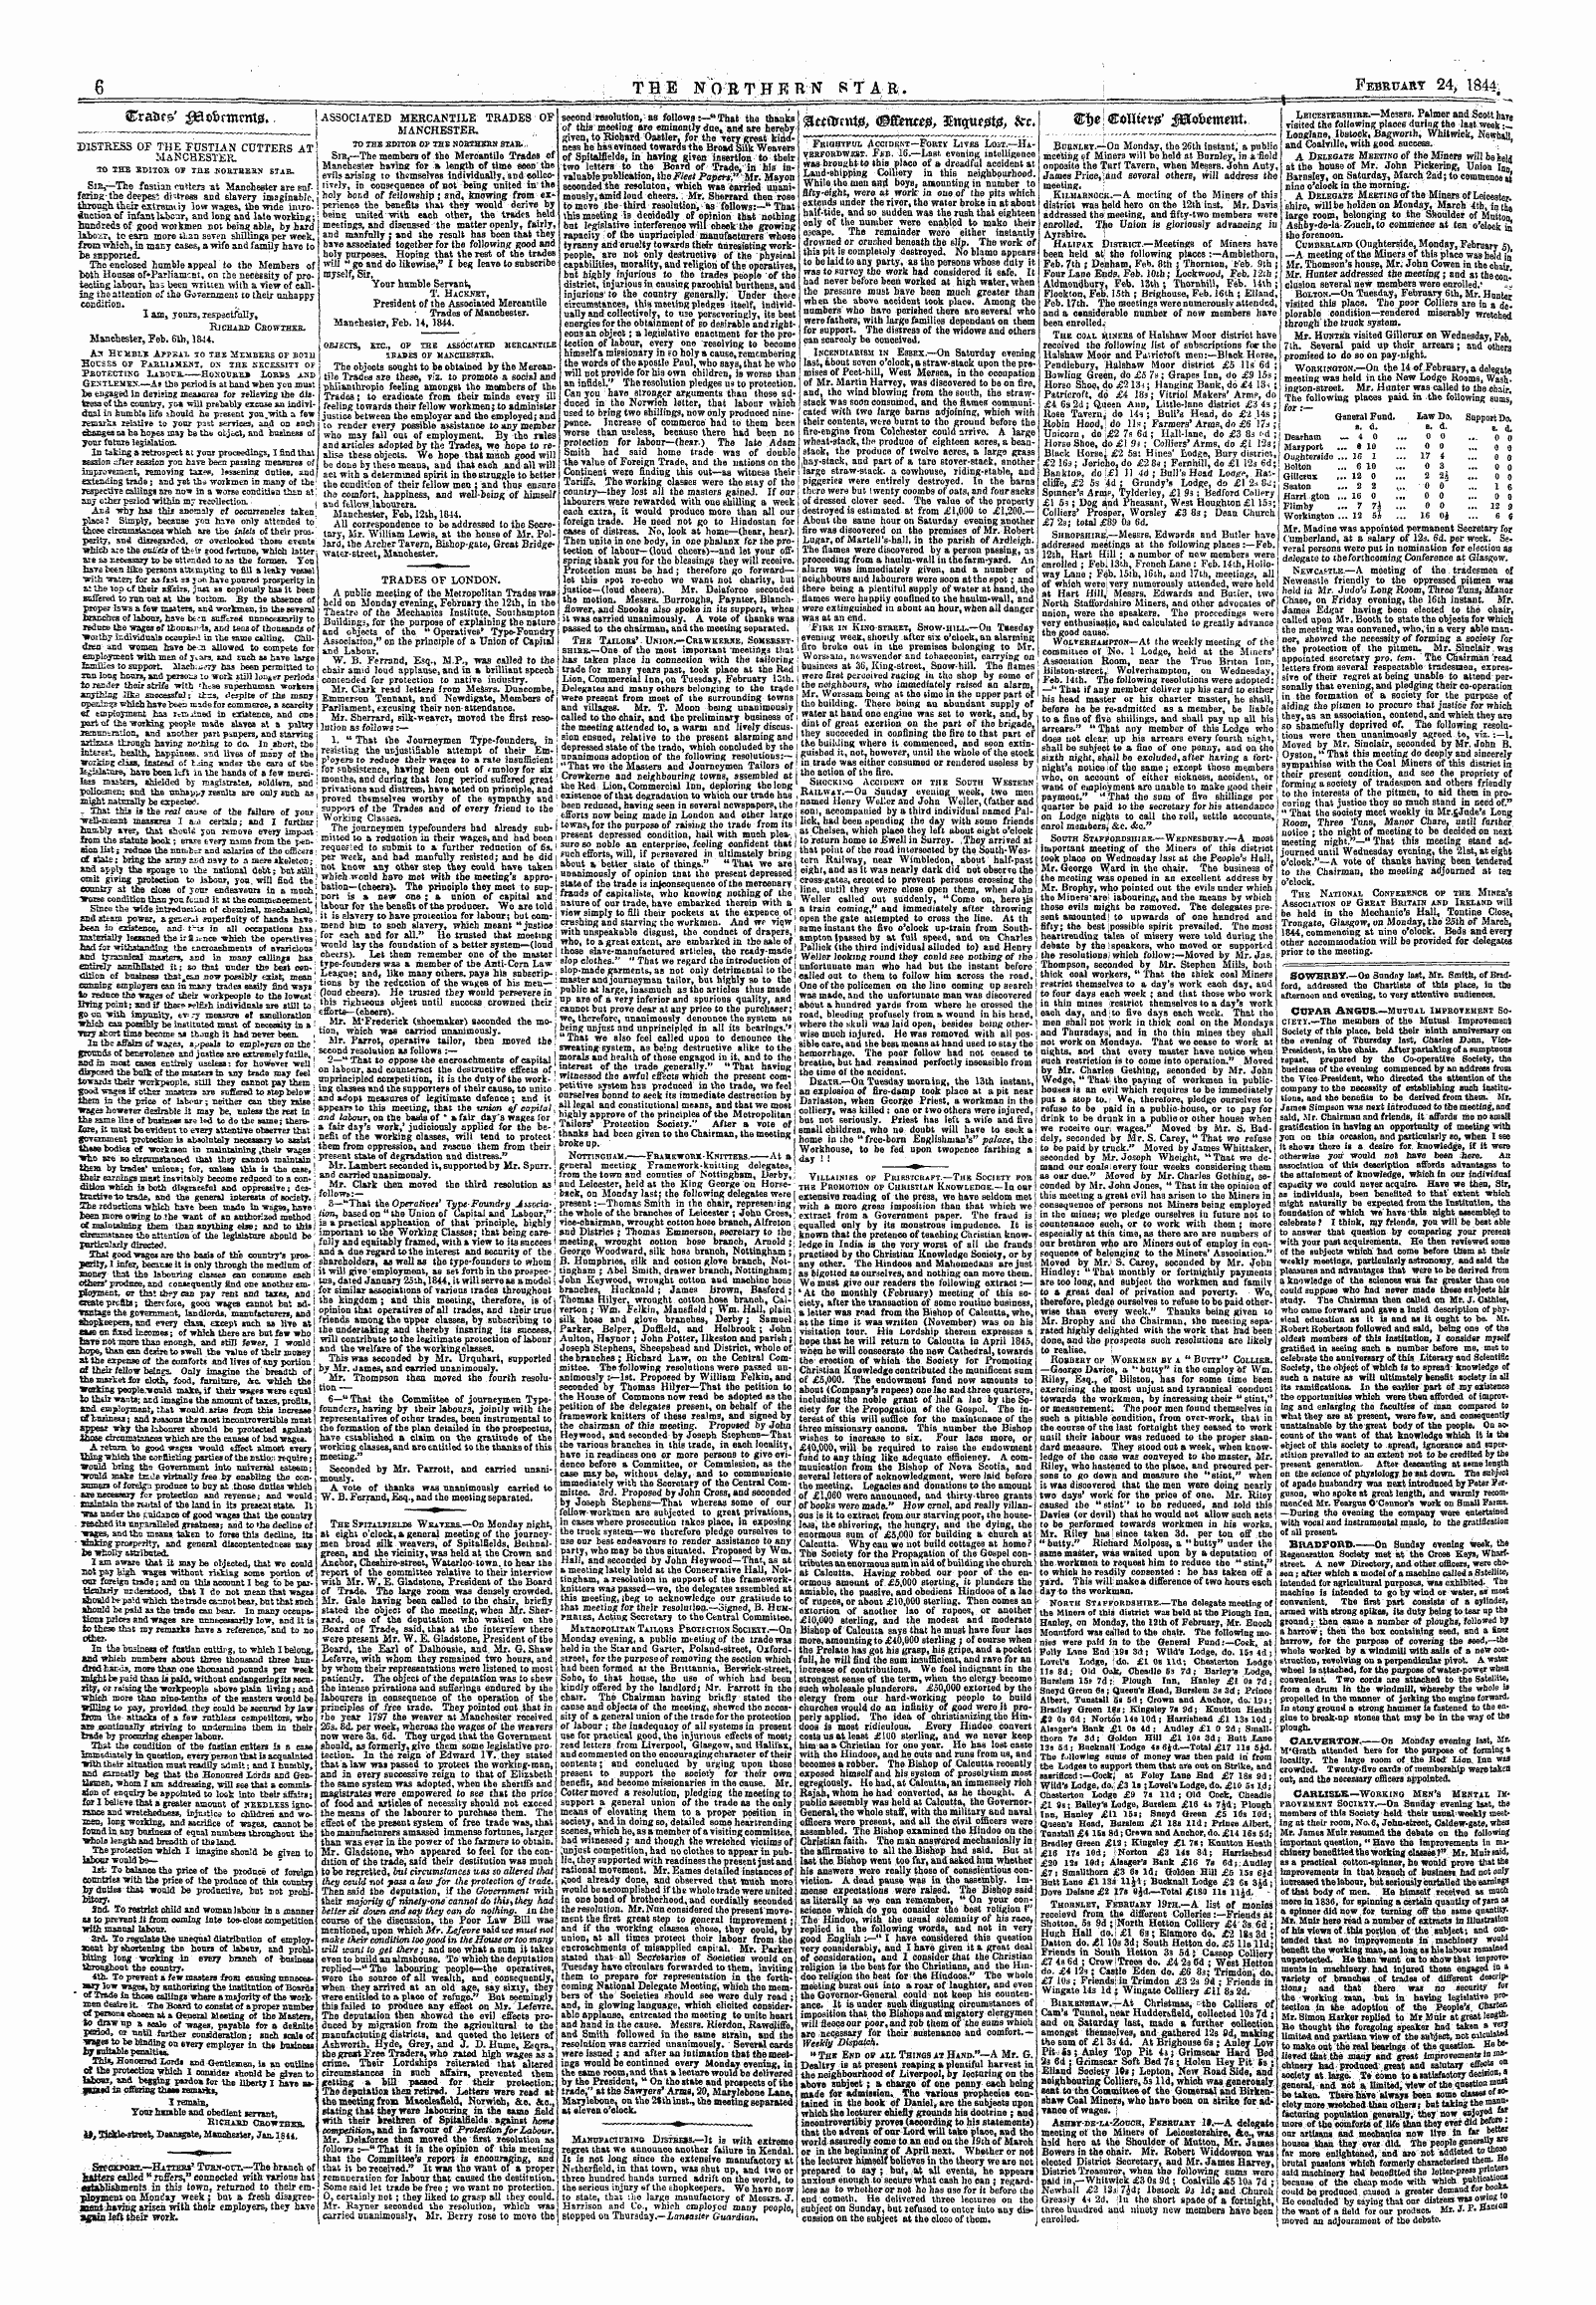 Northern Star (1837-1852): jS F Y, 1st edition - Strafcf.S' Iko&Rmrots.